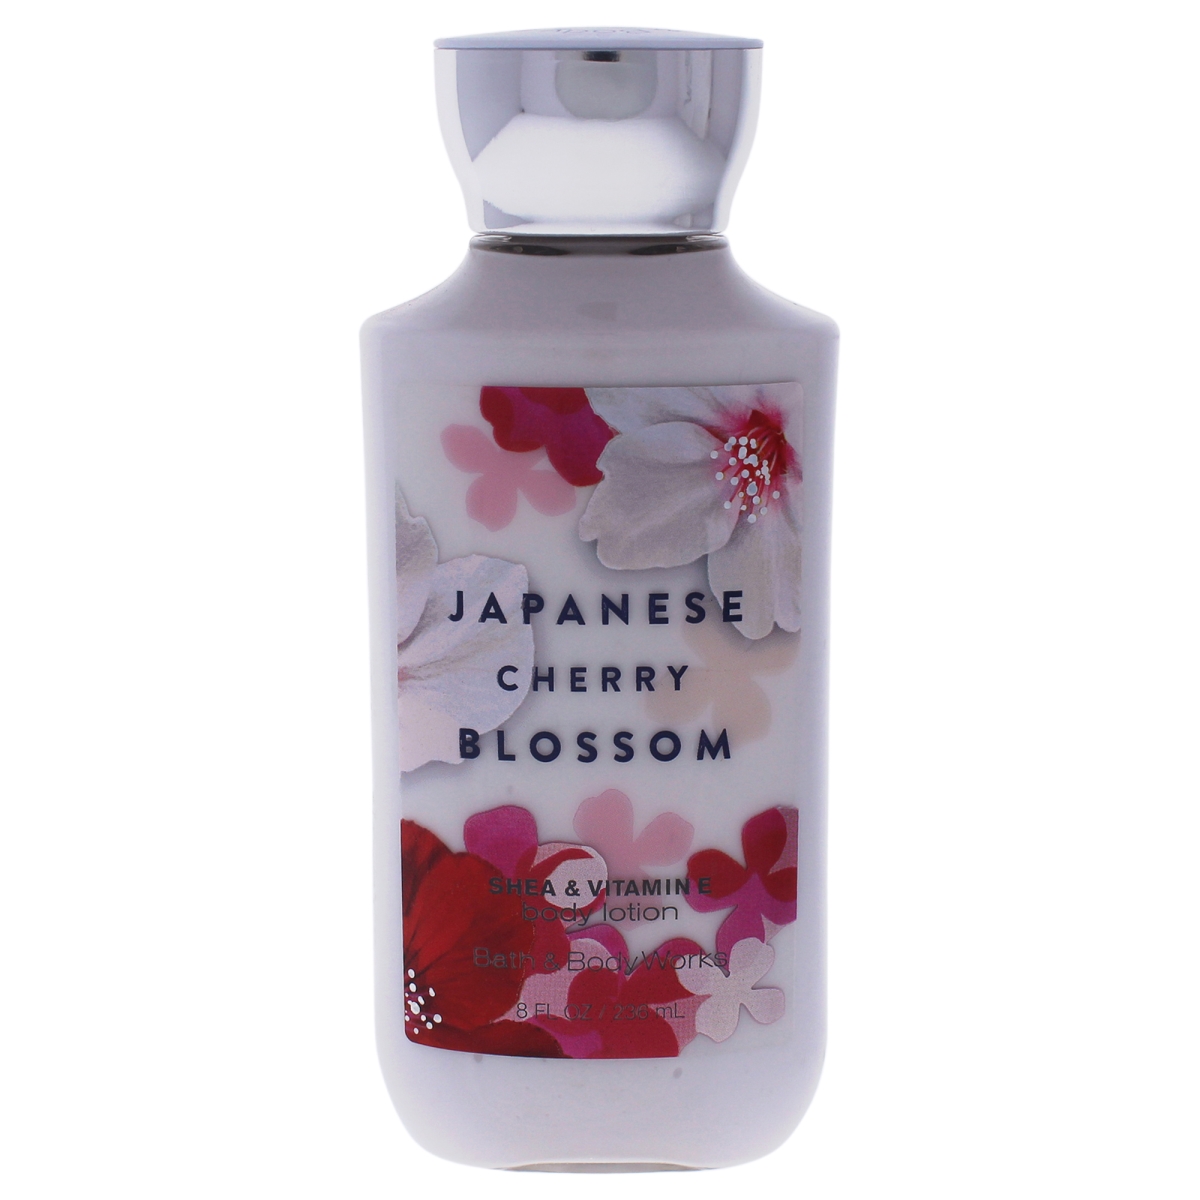 W-bb-3154 8 Oz Japanese Cherry Blossom Body Lotion For Women